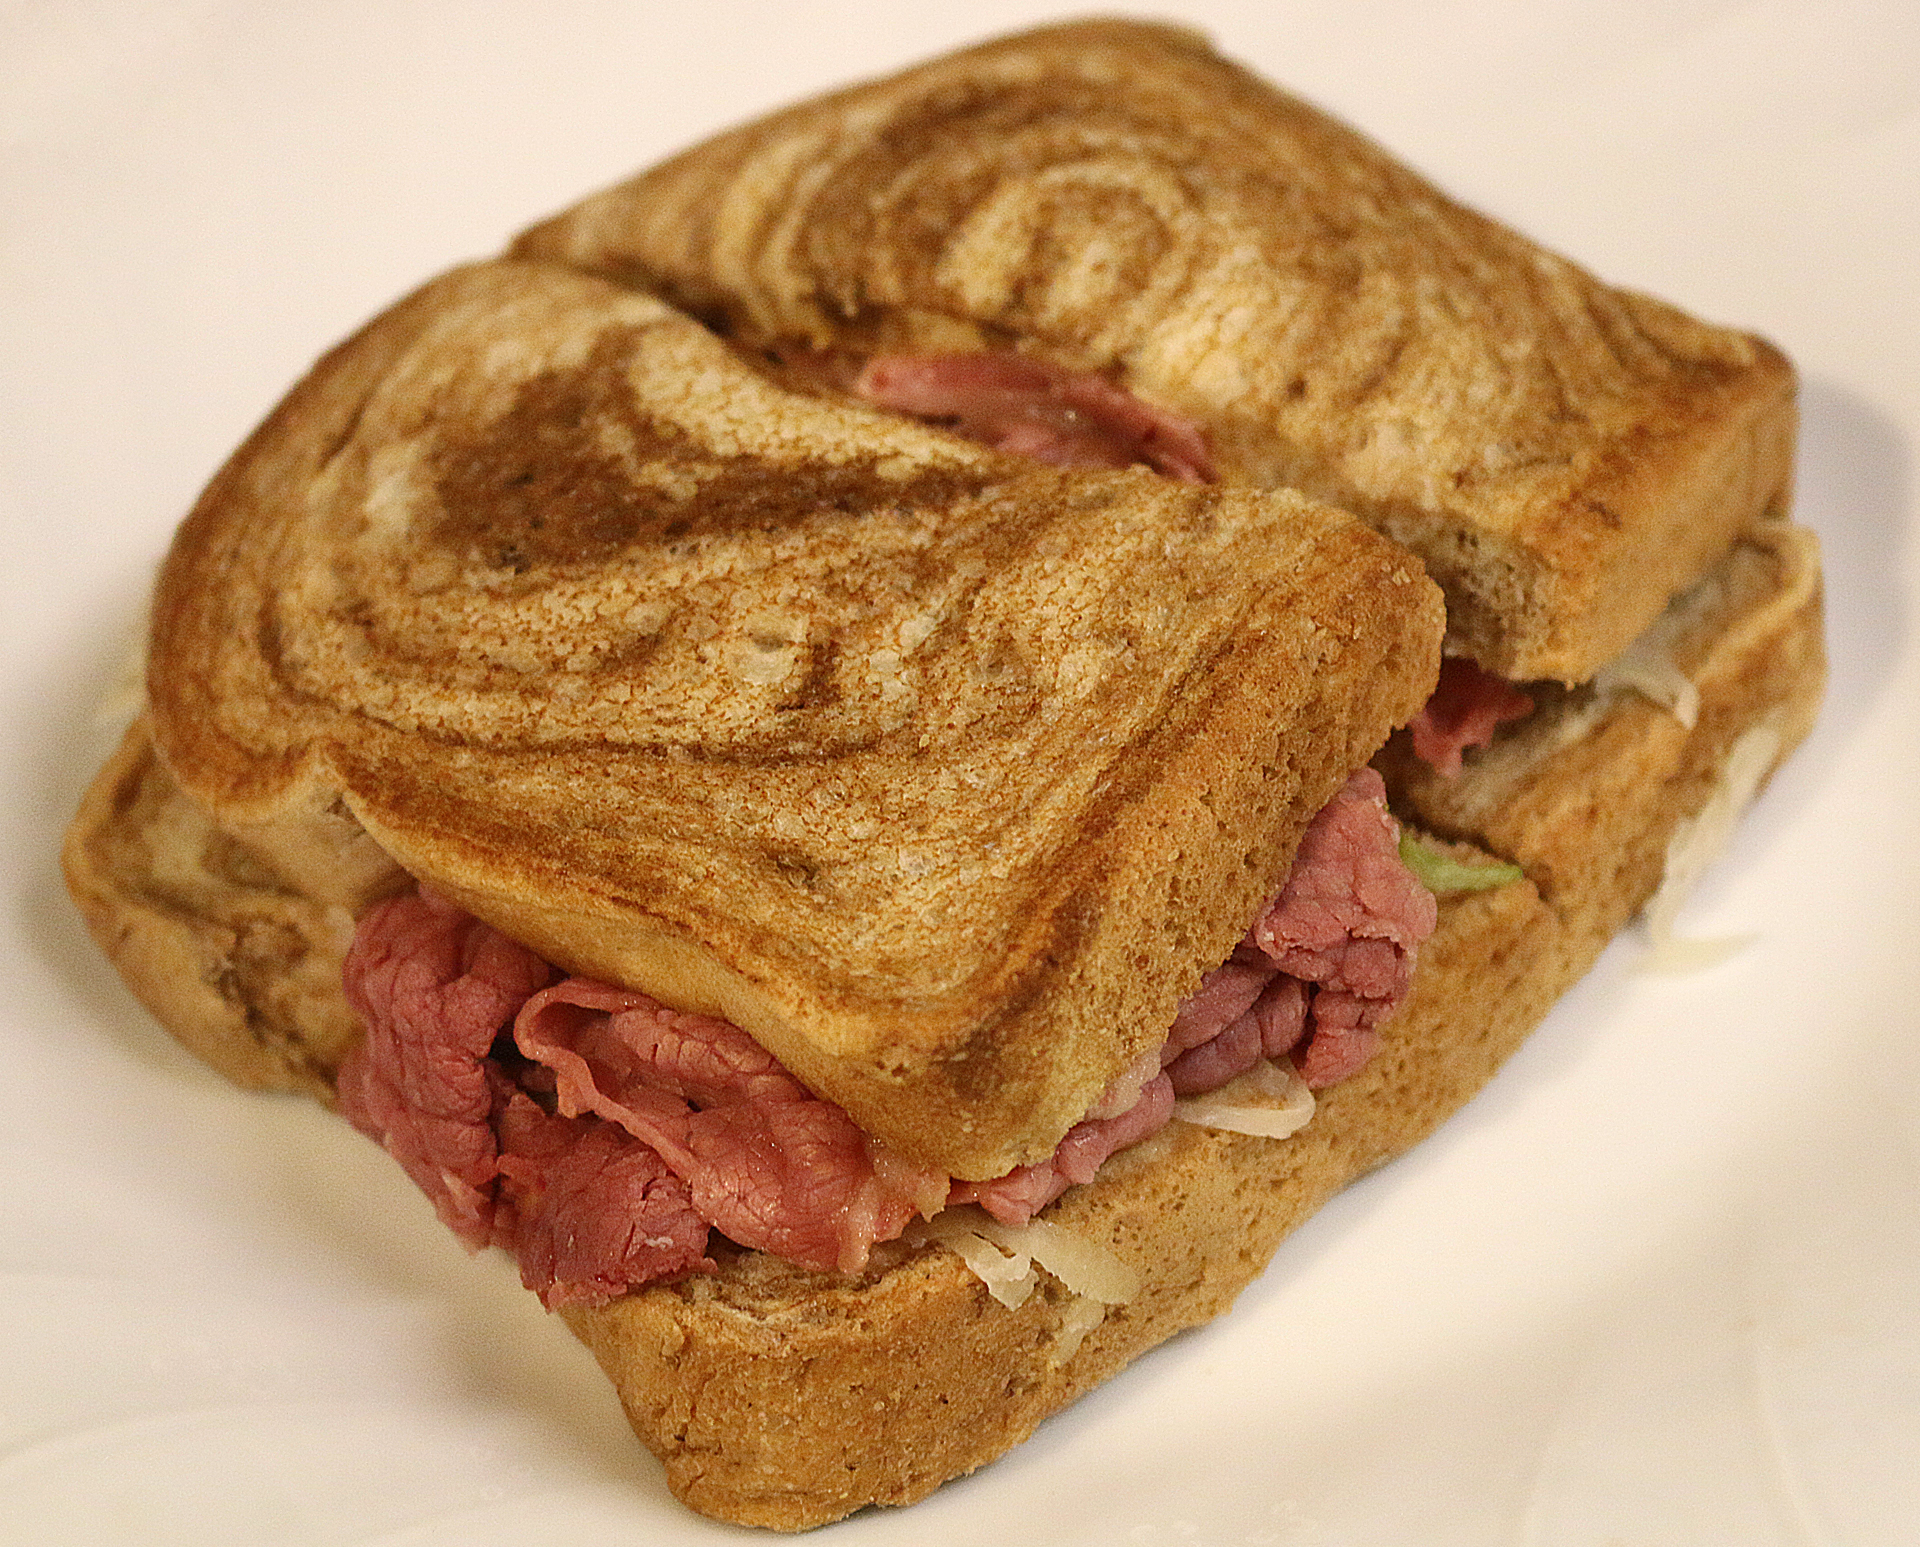 Arby’s Reuben sandwich